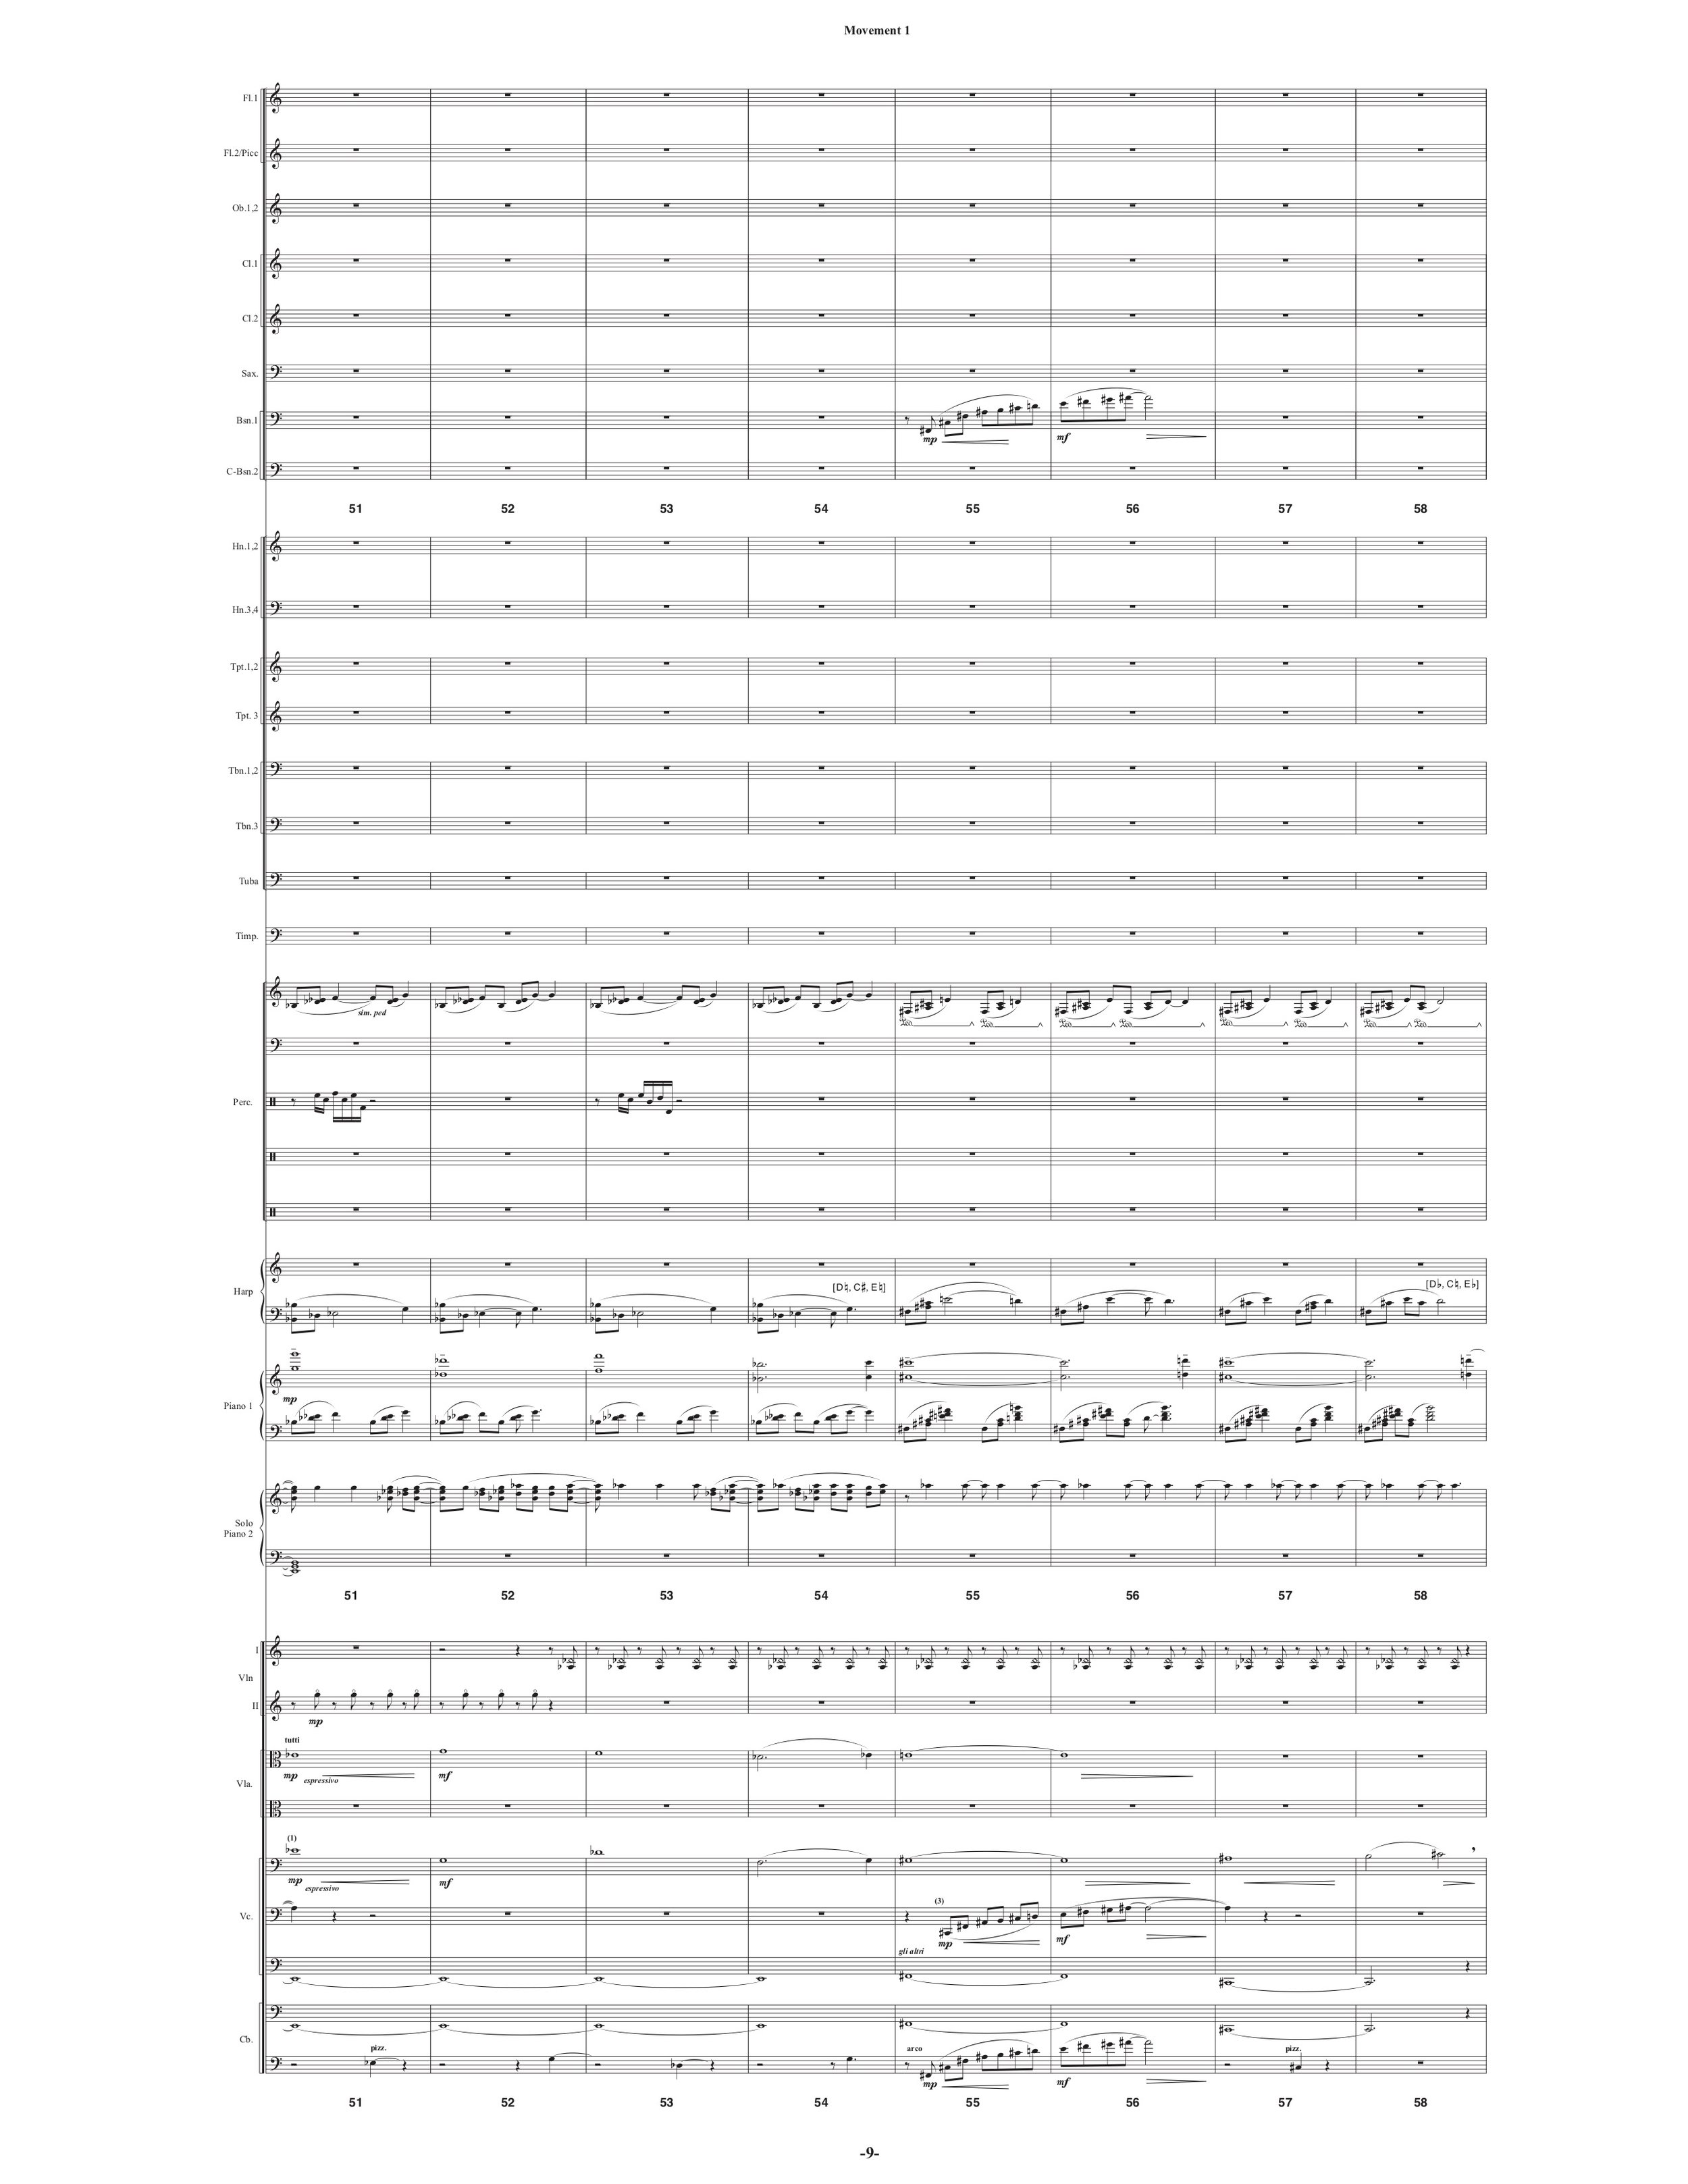 Symphony_Orch & 2 Pianos p14.jpg